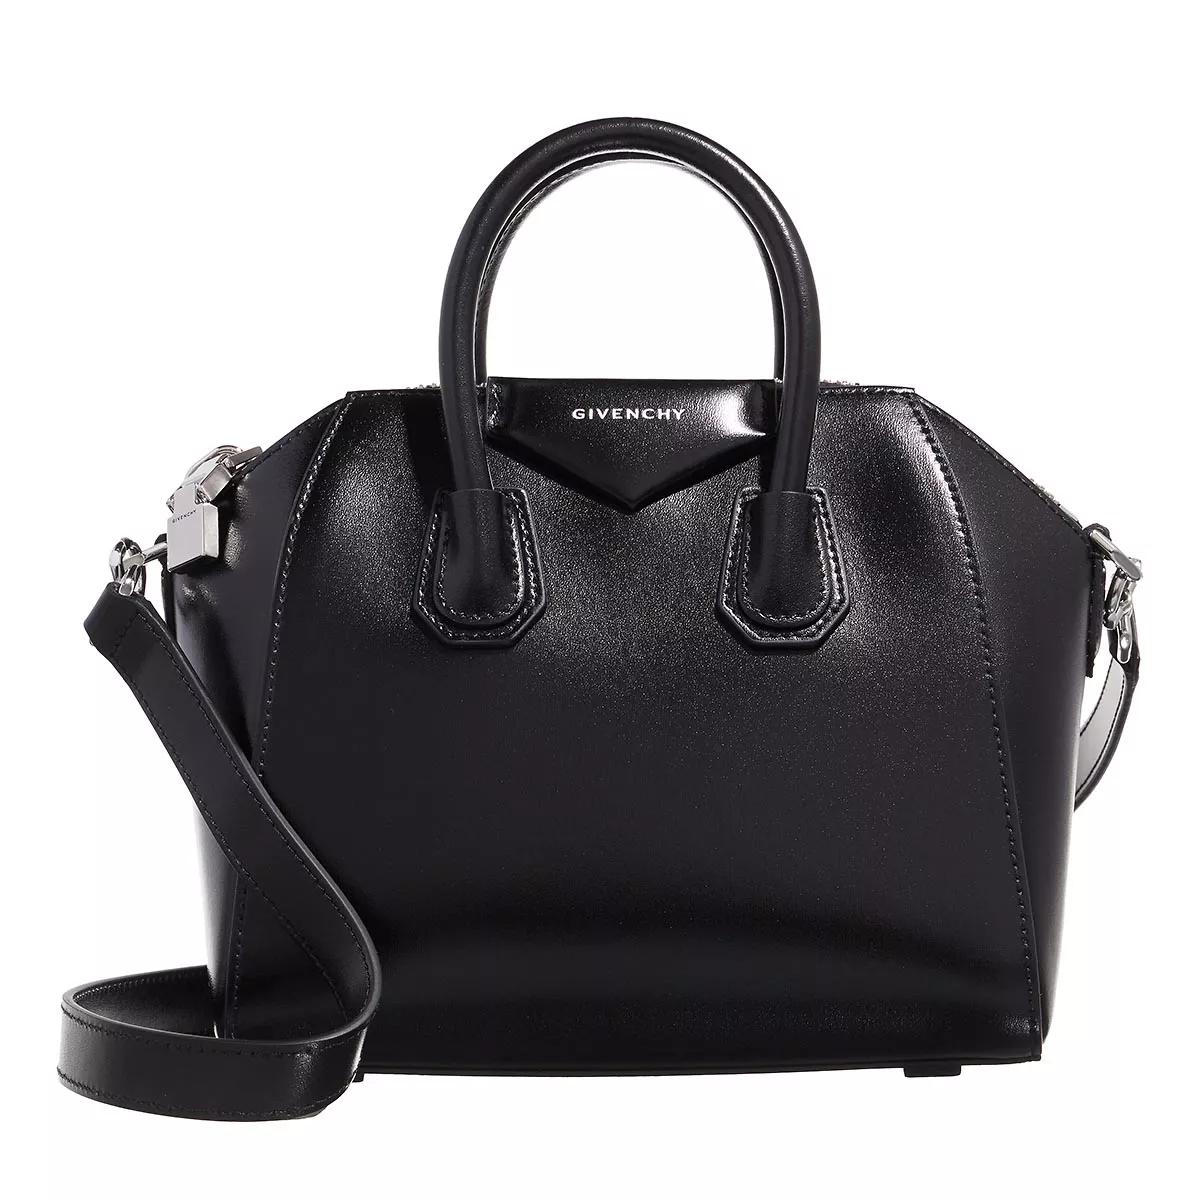 Givenchy Nano Antigona Sugar Leather Crossbody bag. NWT!